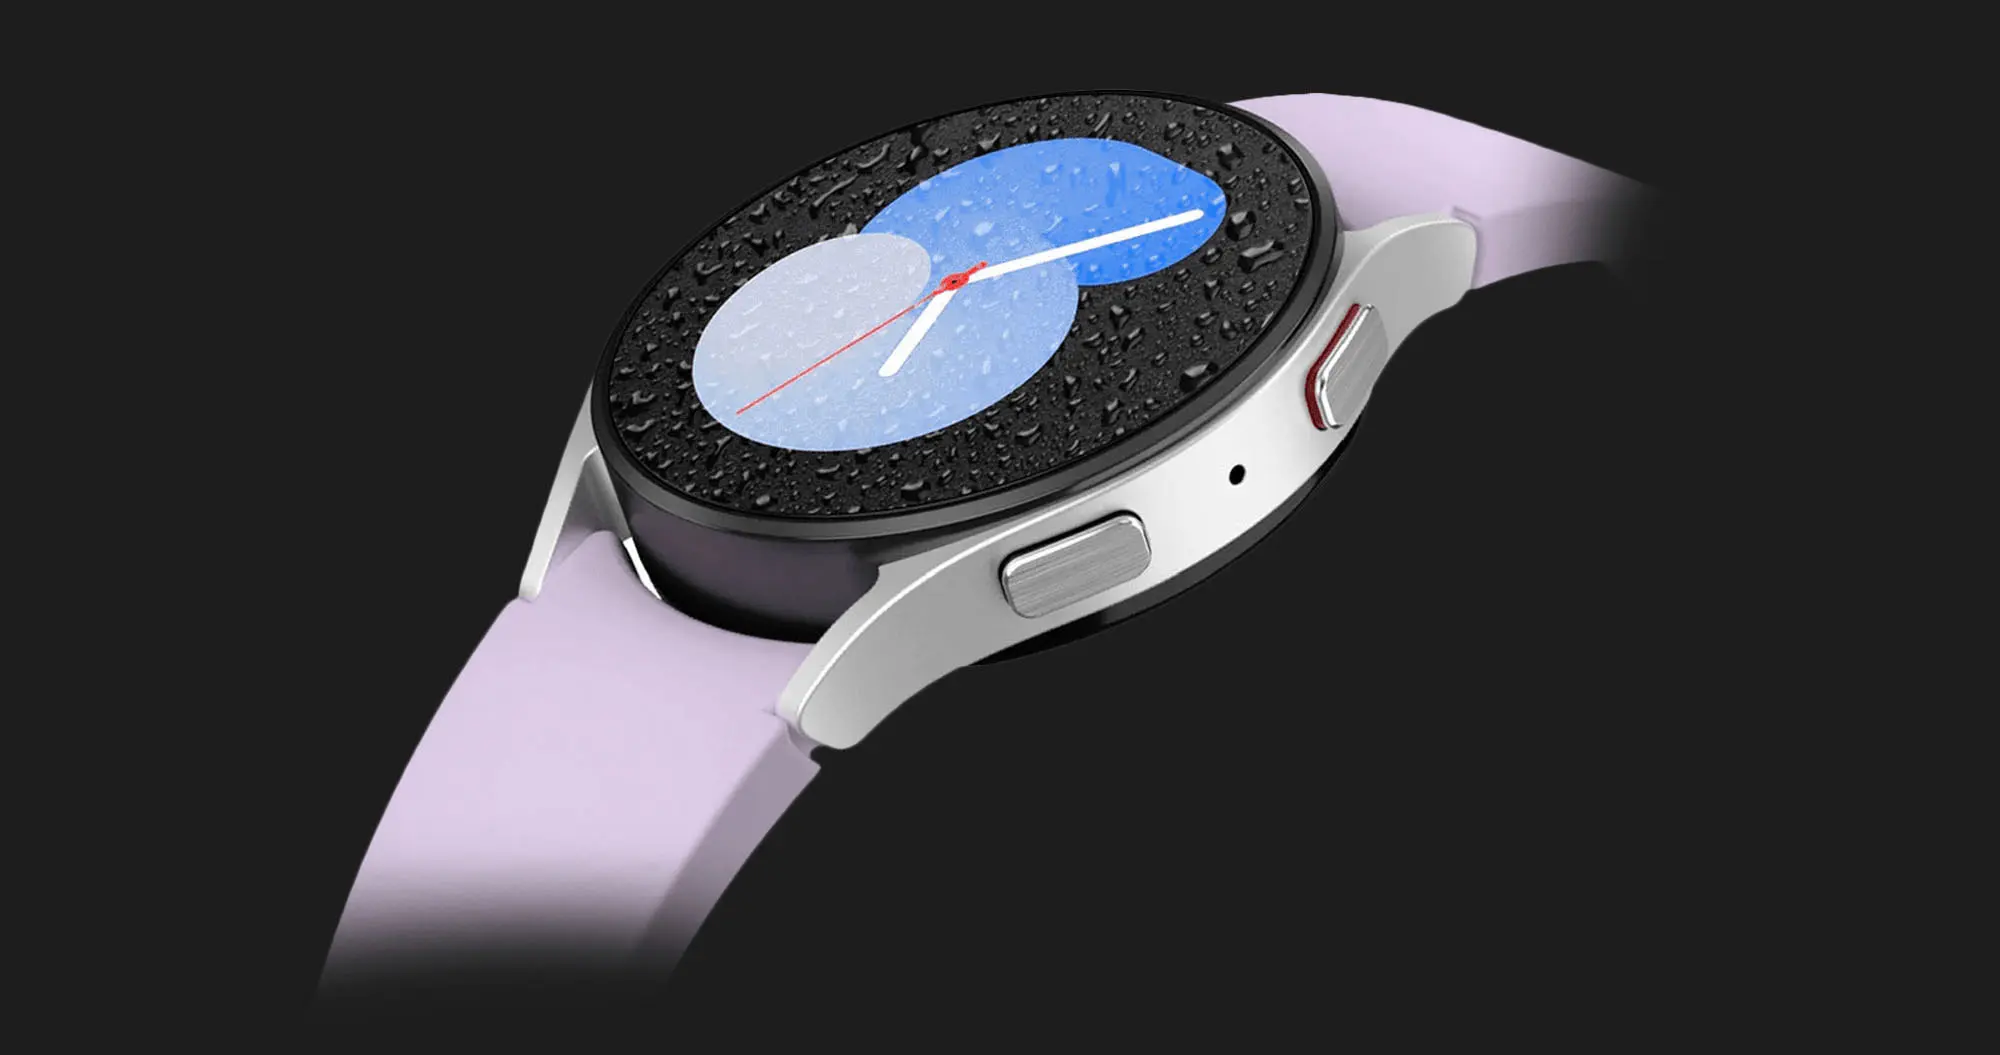 Смарт-часы Samsung Galaxy Watch 5 44mm LTE (Sapphire)